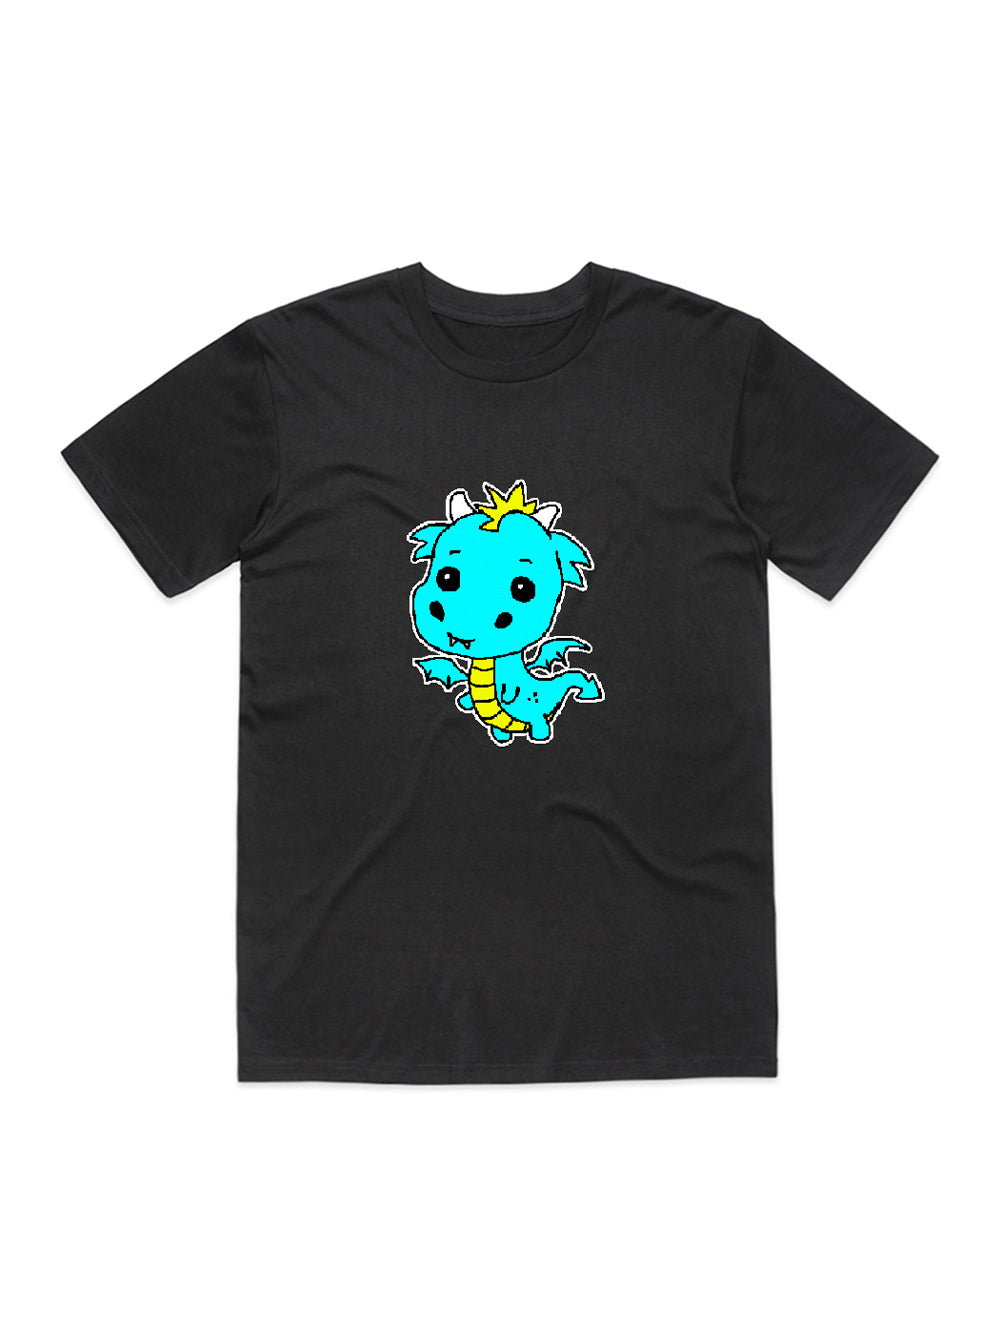 Kawaii Dragon Blue T-Shirt (Black)